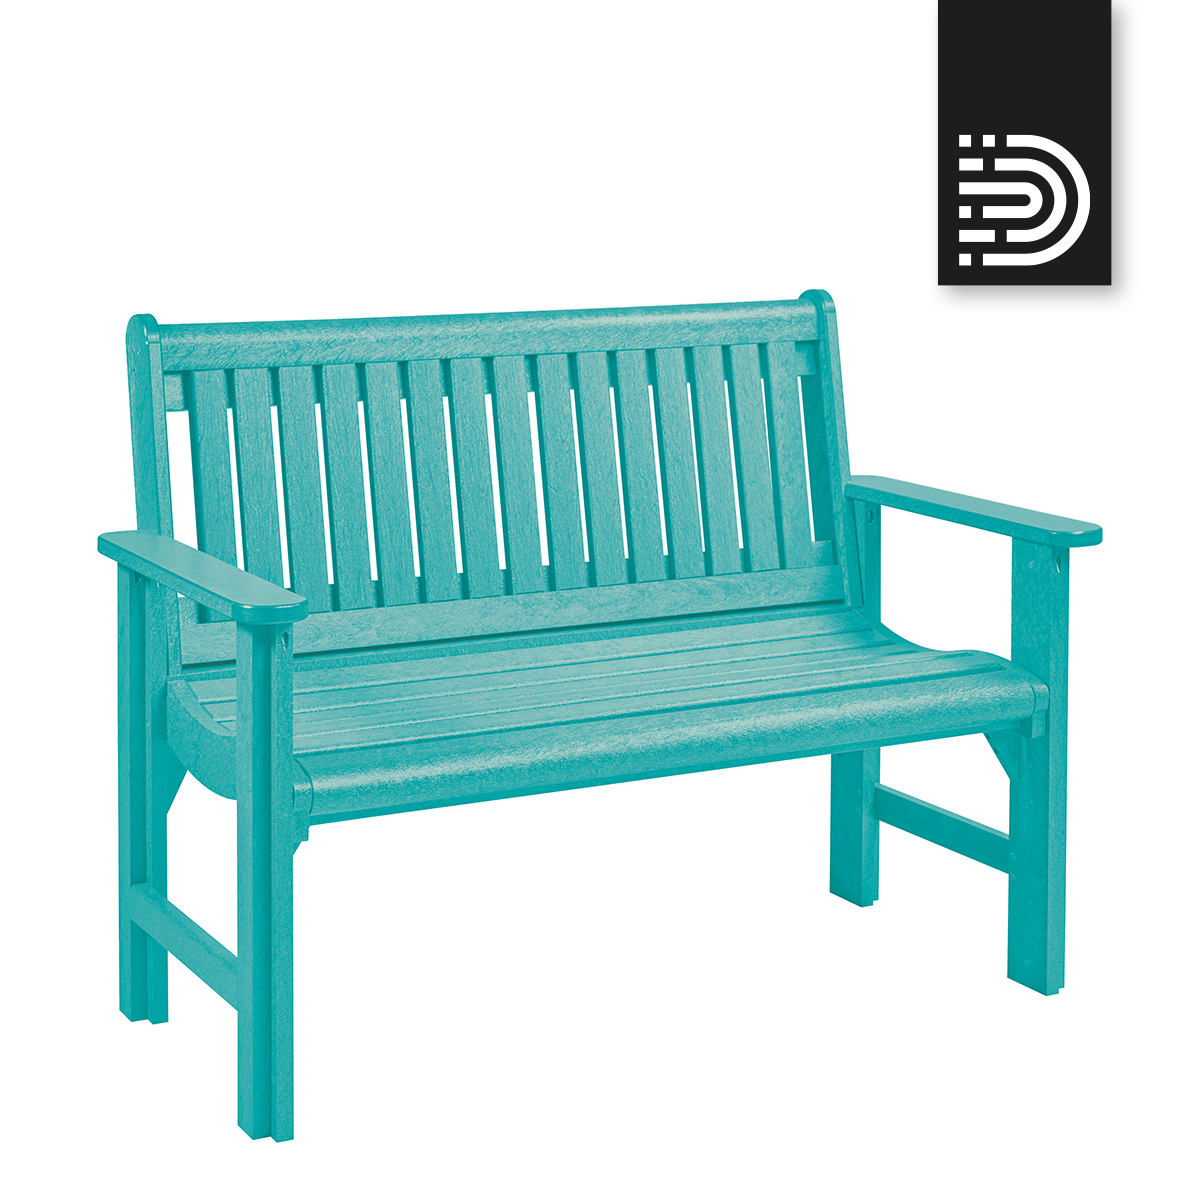 B01 4' Premium Garden Bench- turquoise 09